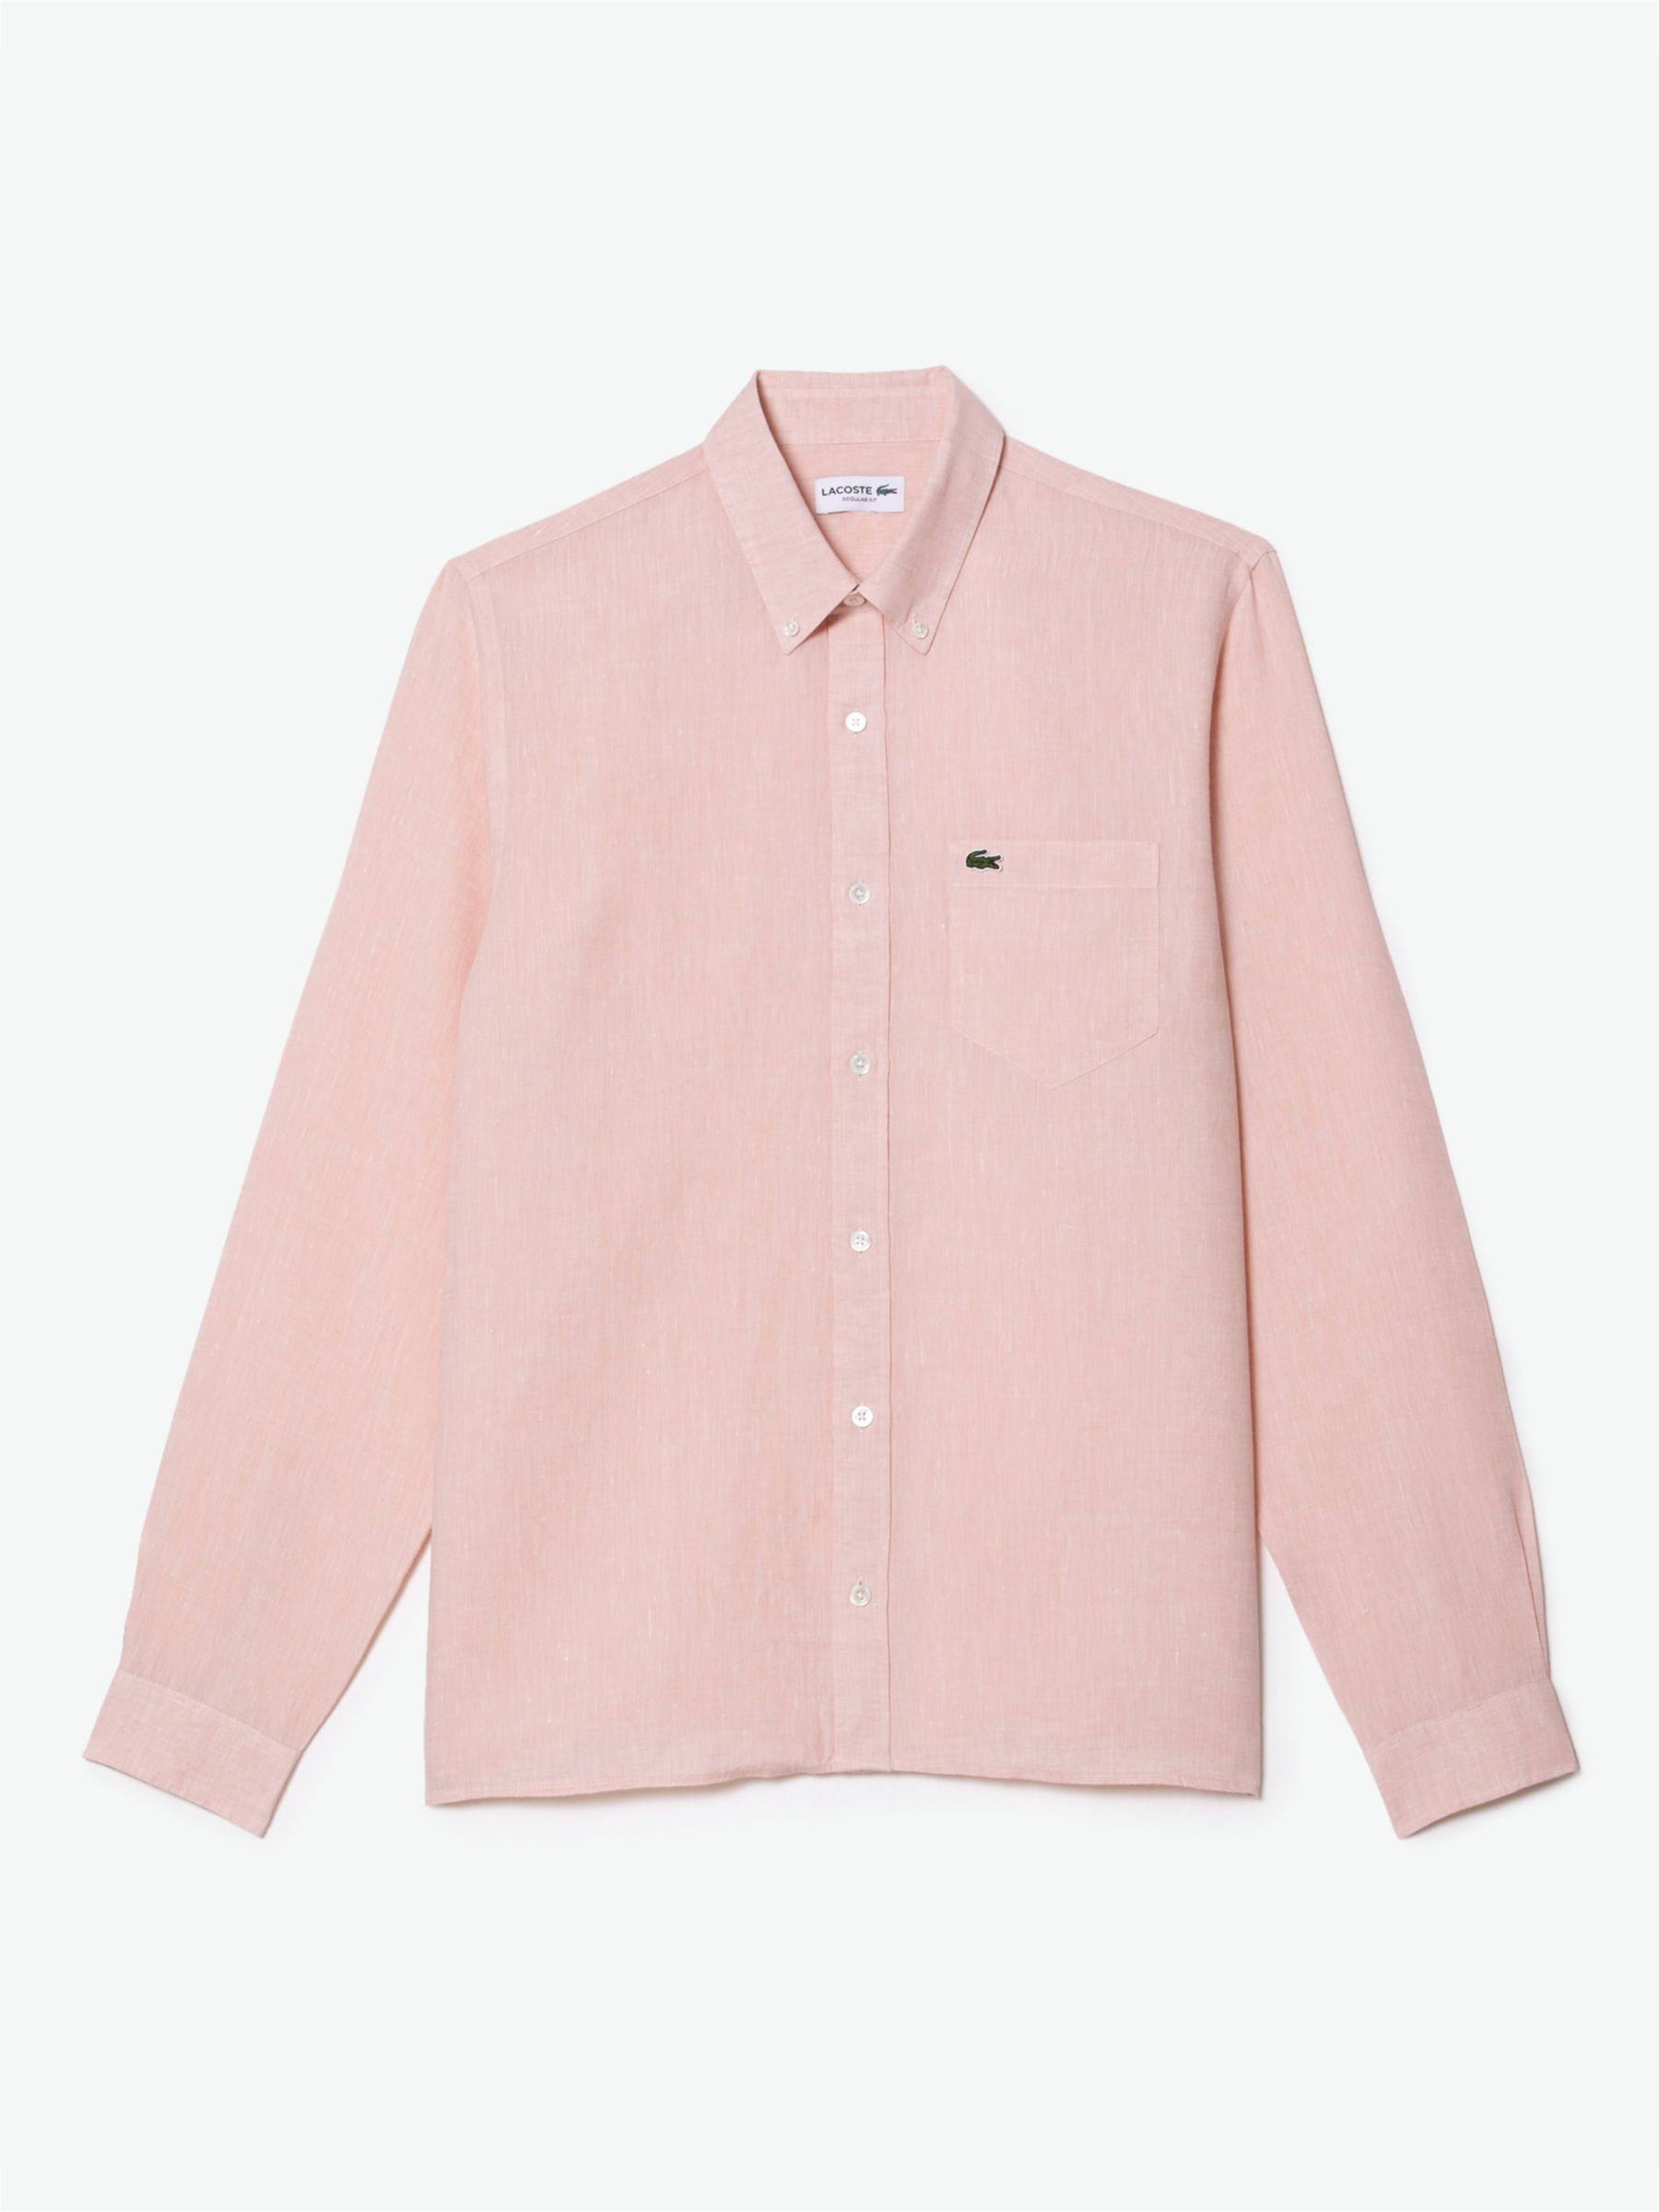 Lacoste Long Sleeve Linen Shirt, Flamingo, XXL